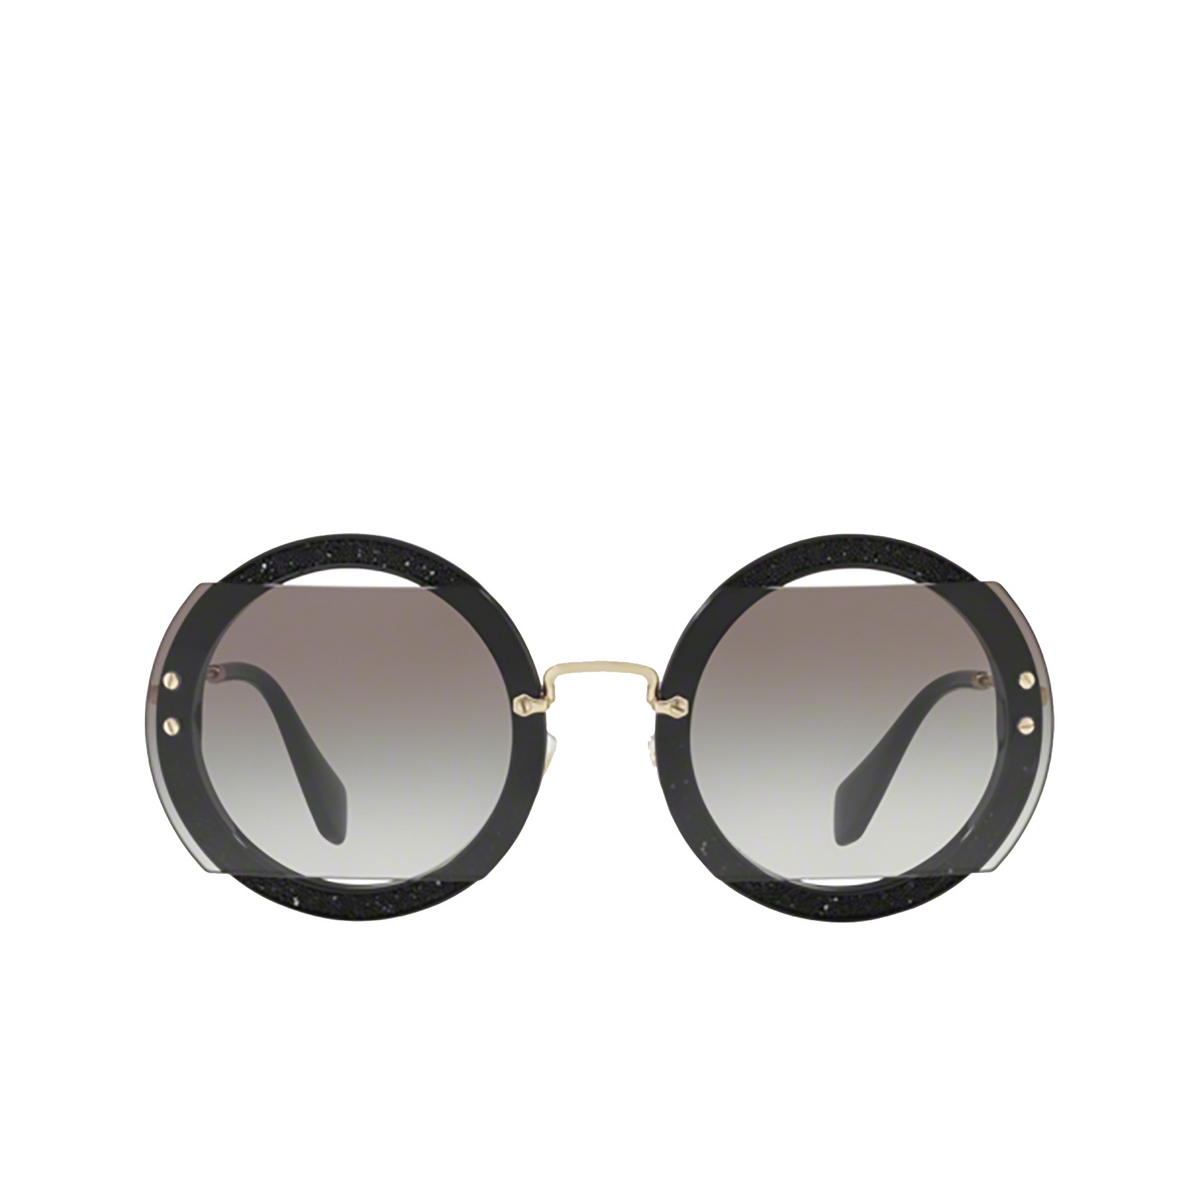 Miu Miu® Round Sunglasses: MU 06SS color Black 1AB0A7 - front view.